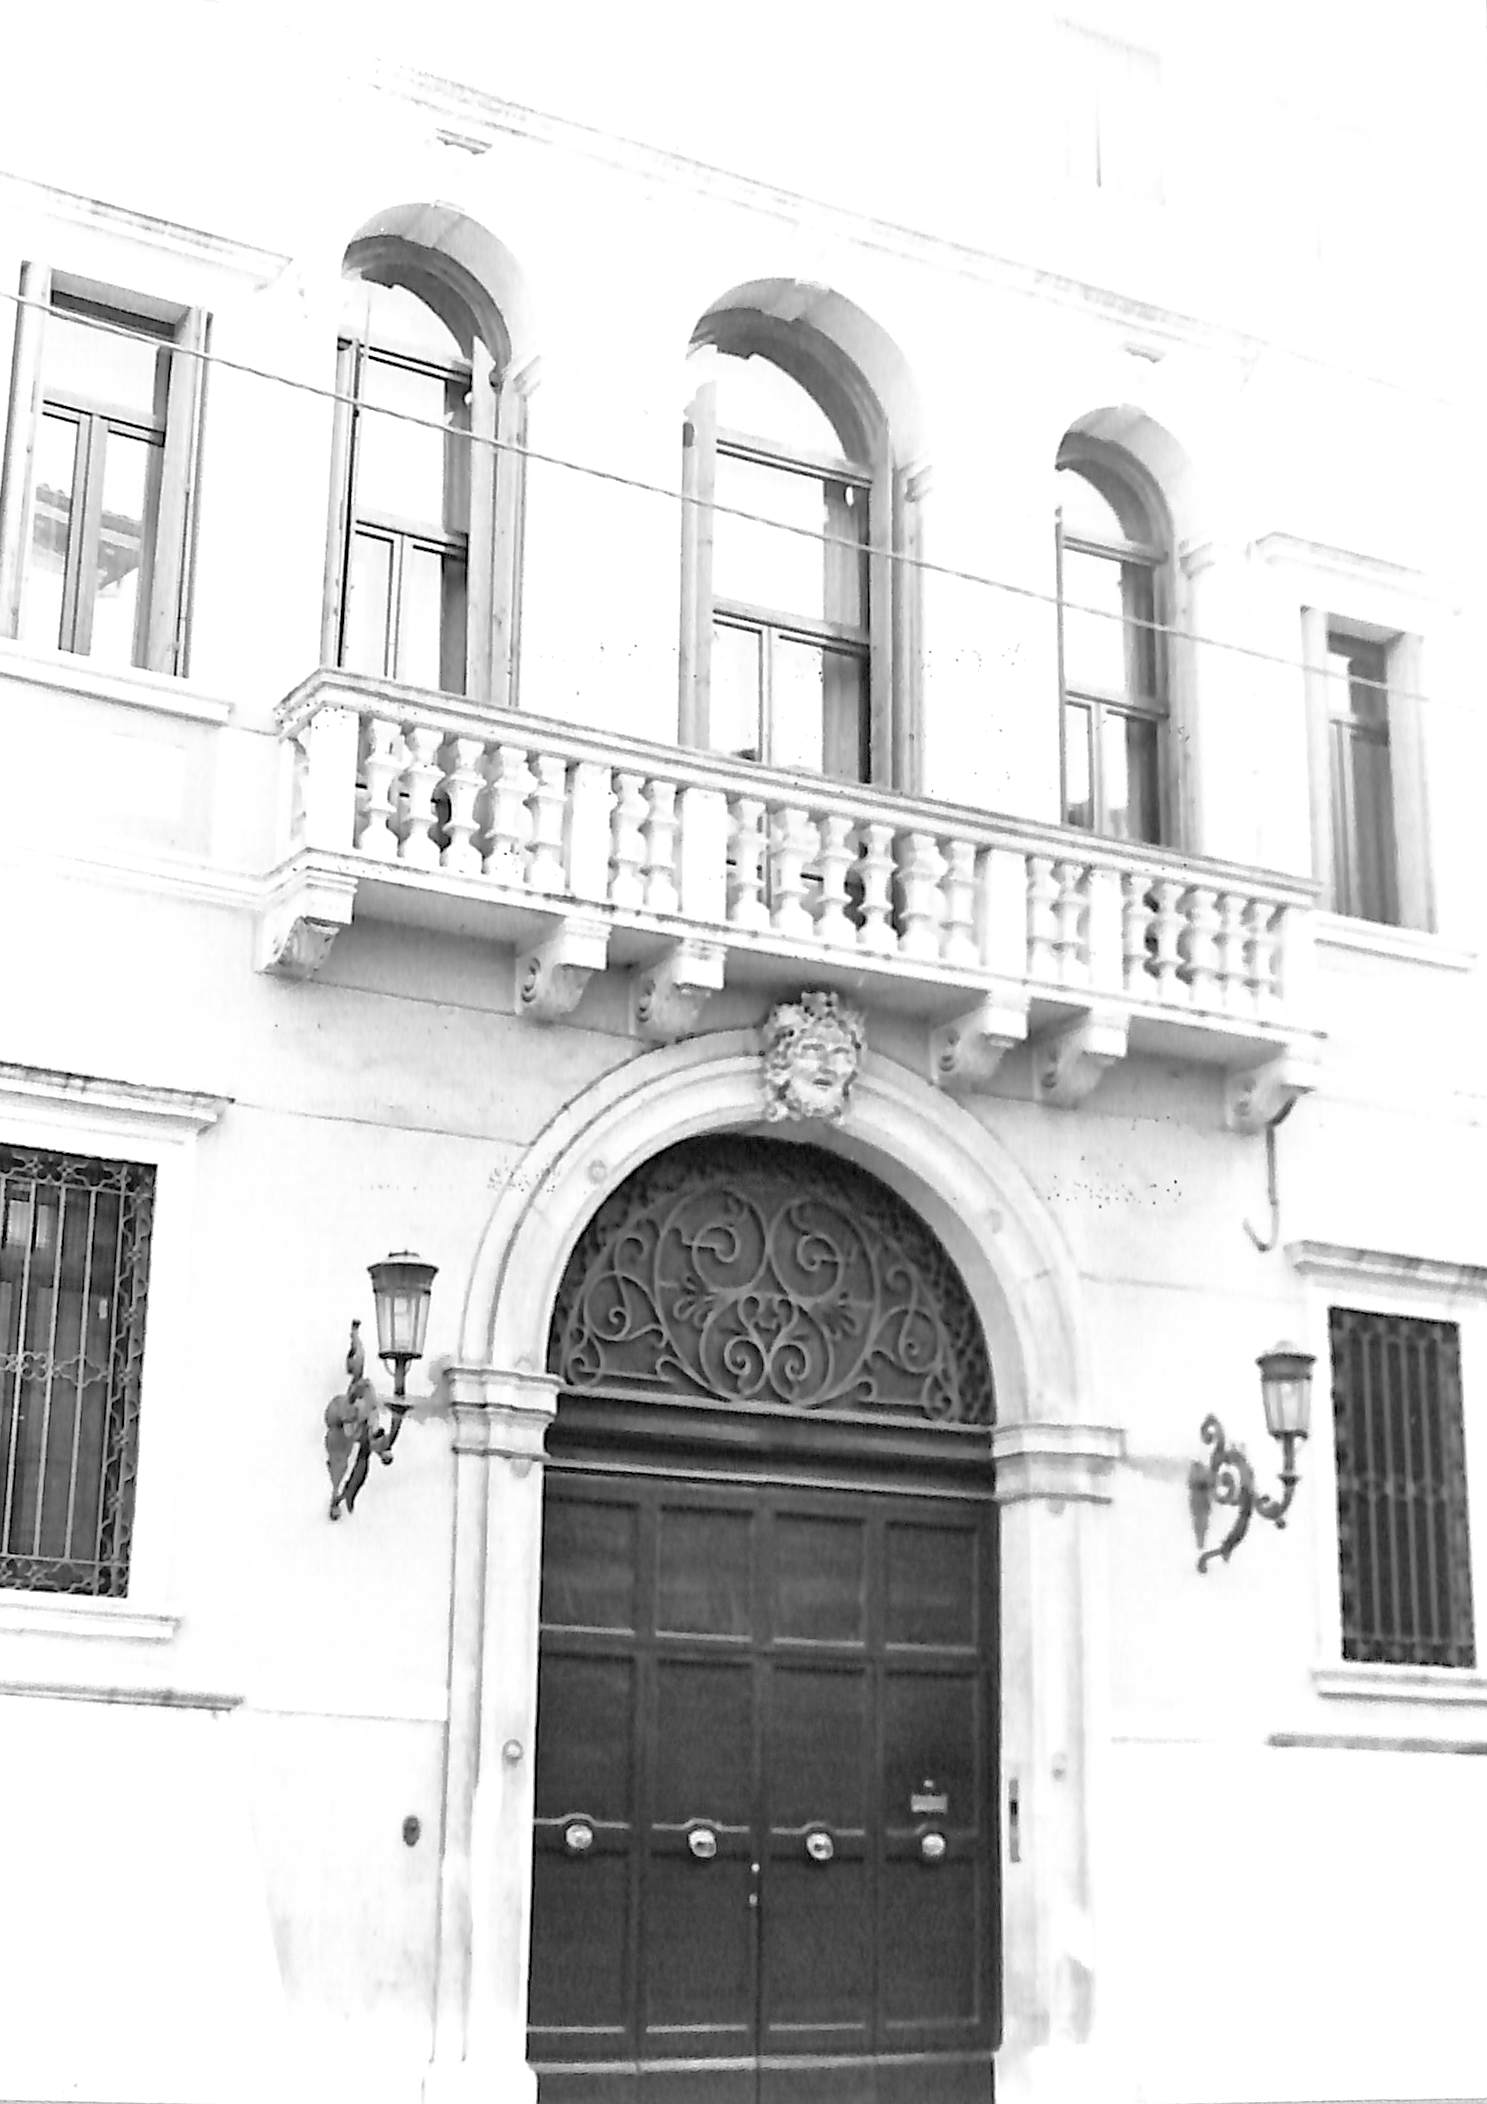 Palazzo Salvadego Sgarzi (palazzo, nobiliare) - Rovigo (RO)  (XVIII)